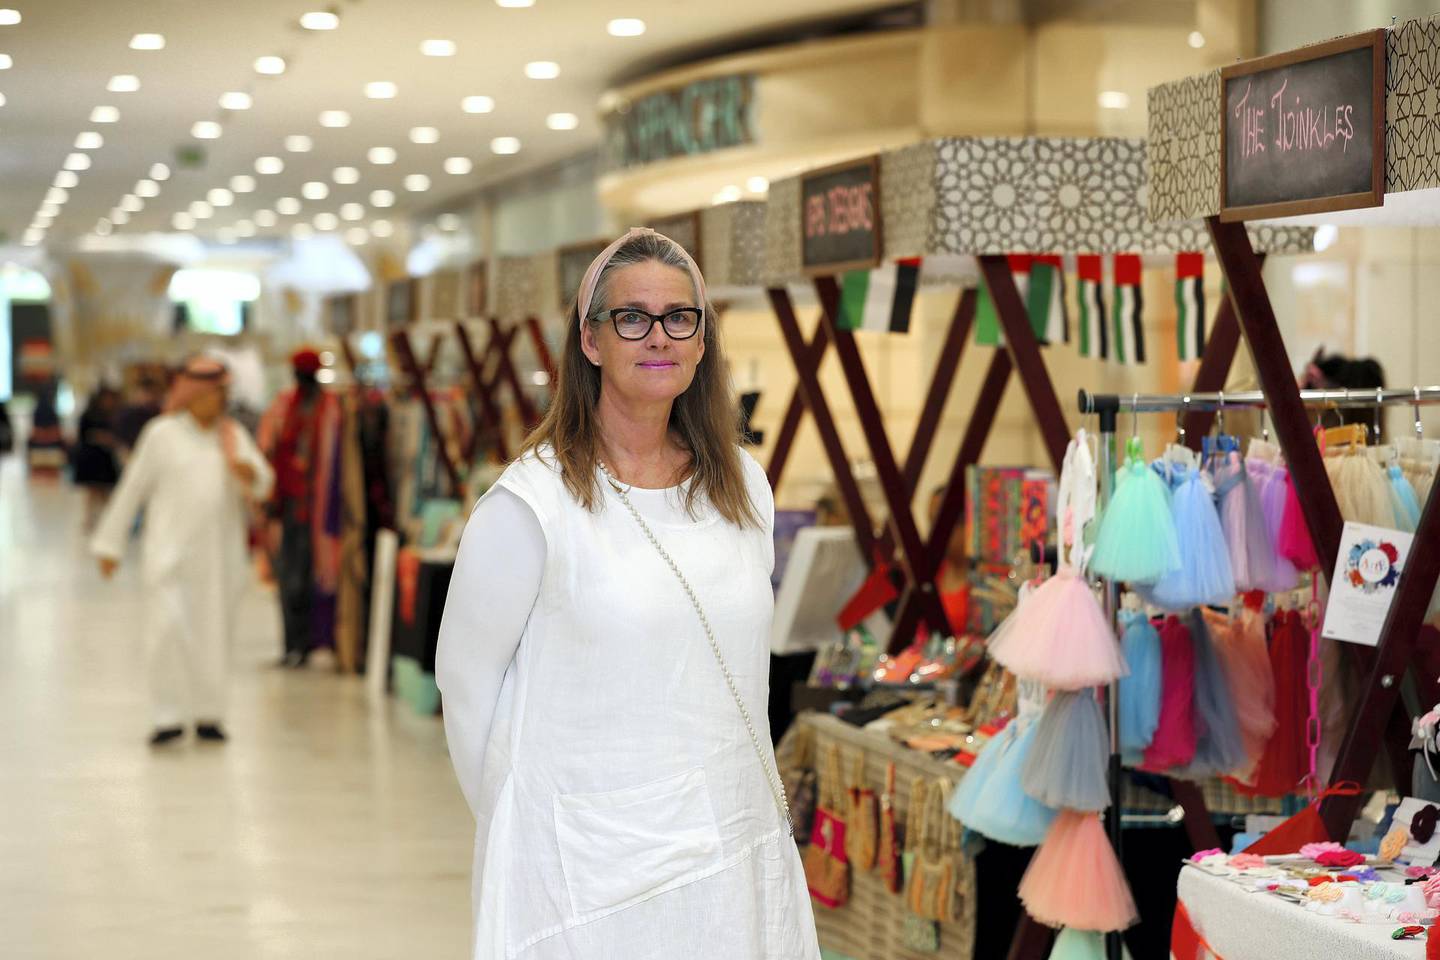 Dubai, United Arab Emirates - December 1st, 2017: Miriam Walsh, founder and organiser of ArtEartisans markets. Friday, December 1st, 2017 at WAFI Mall, Dubai. Chris Whiteoak / The National